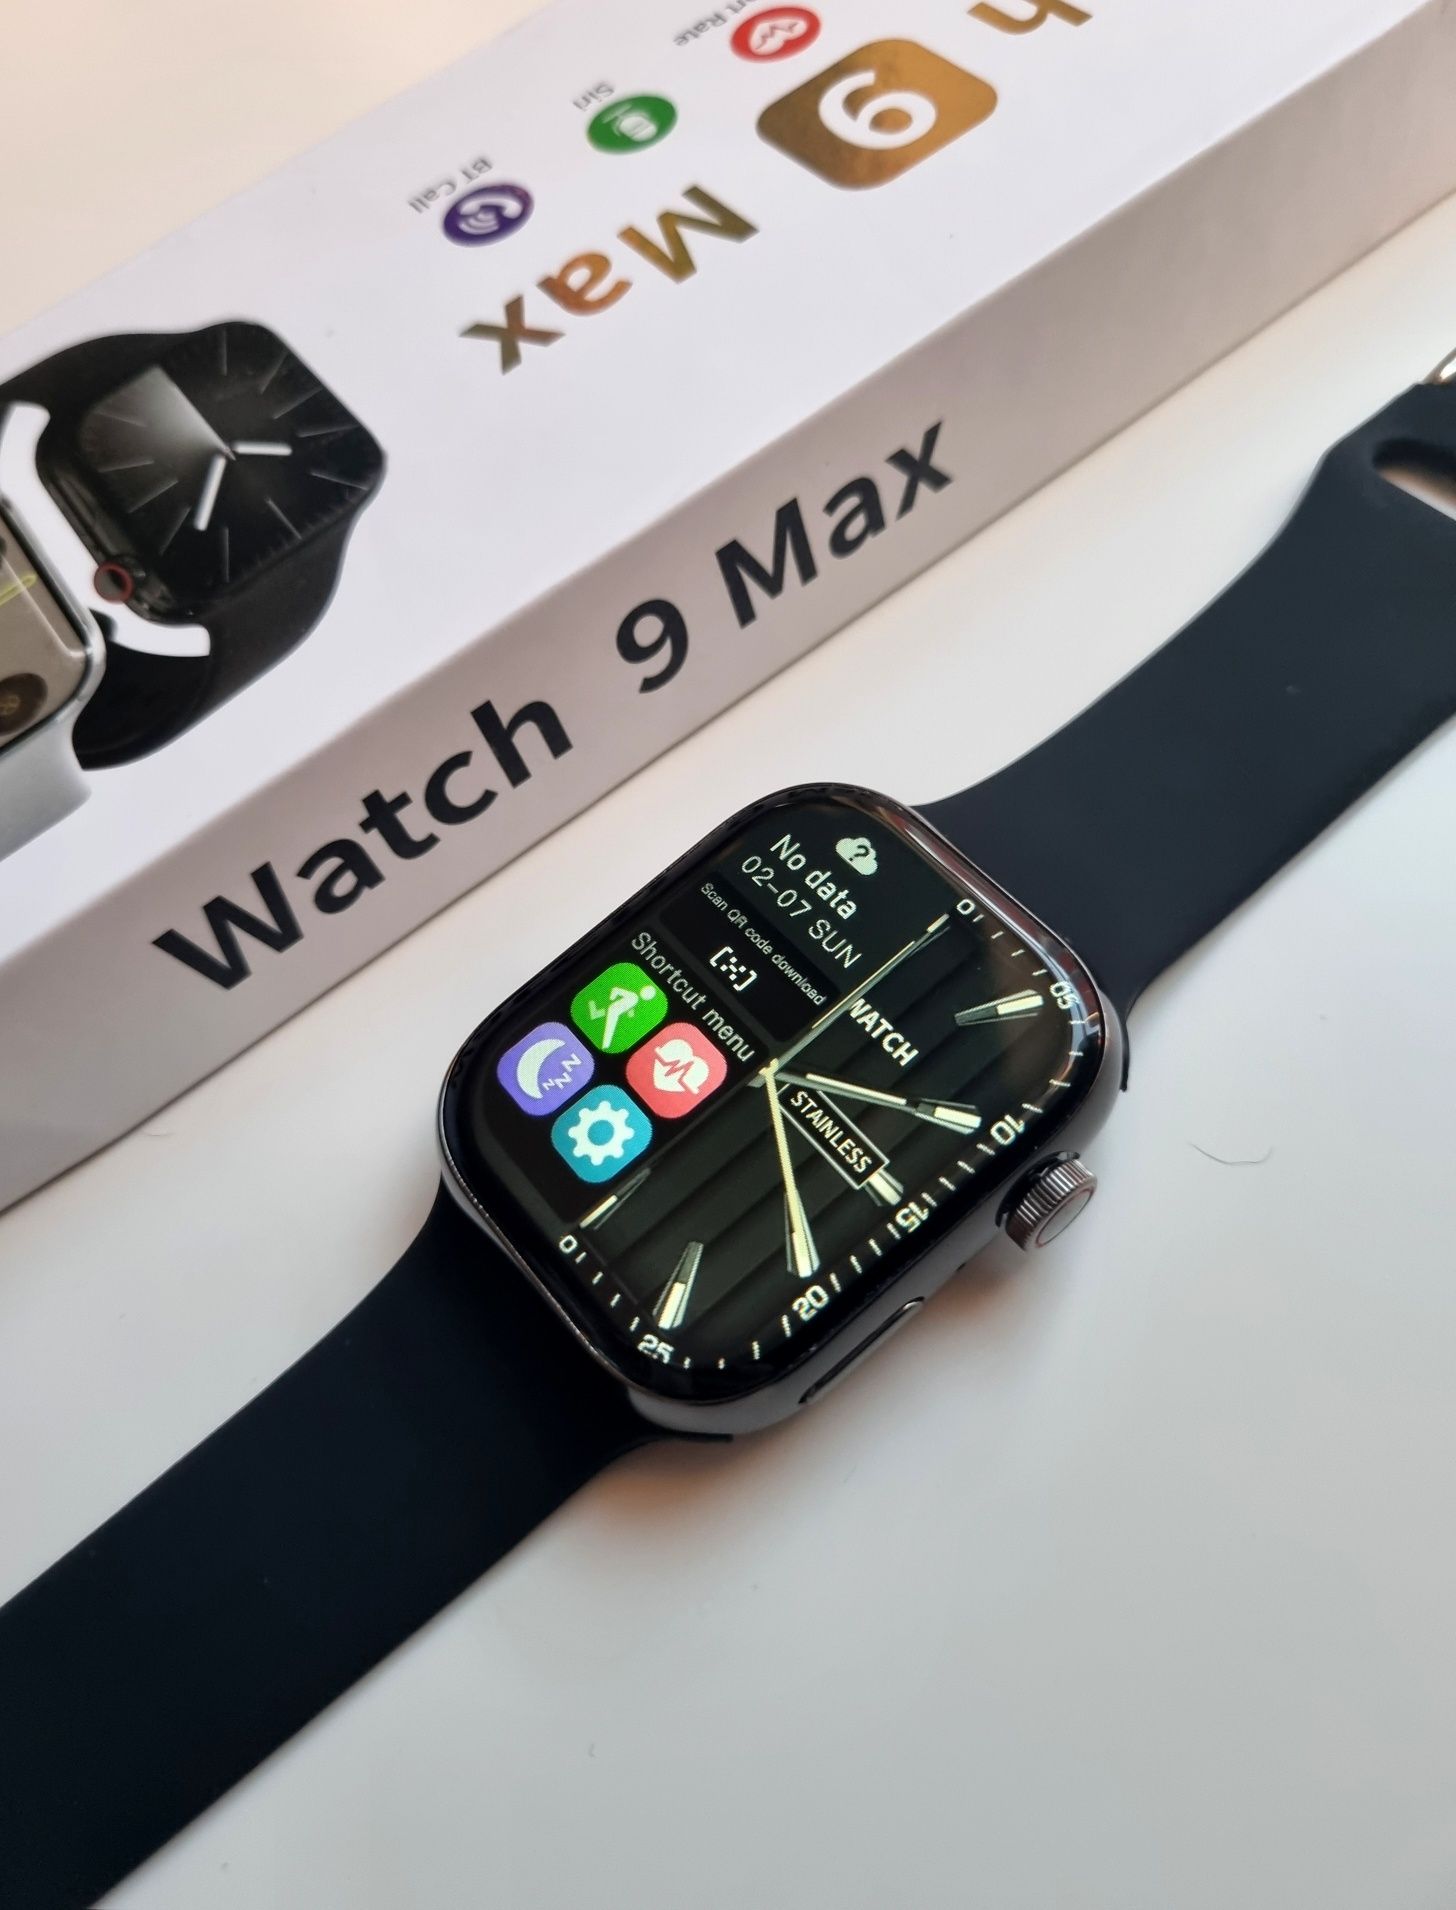 Smartwatch 9 Max